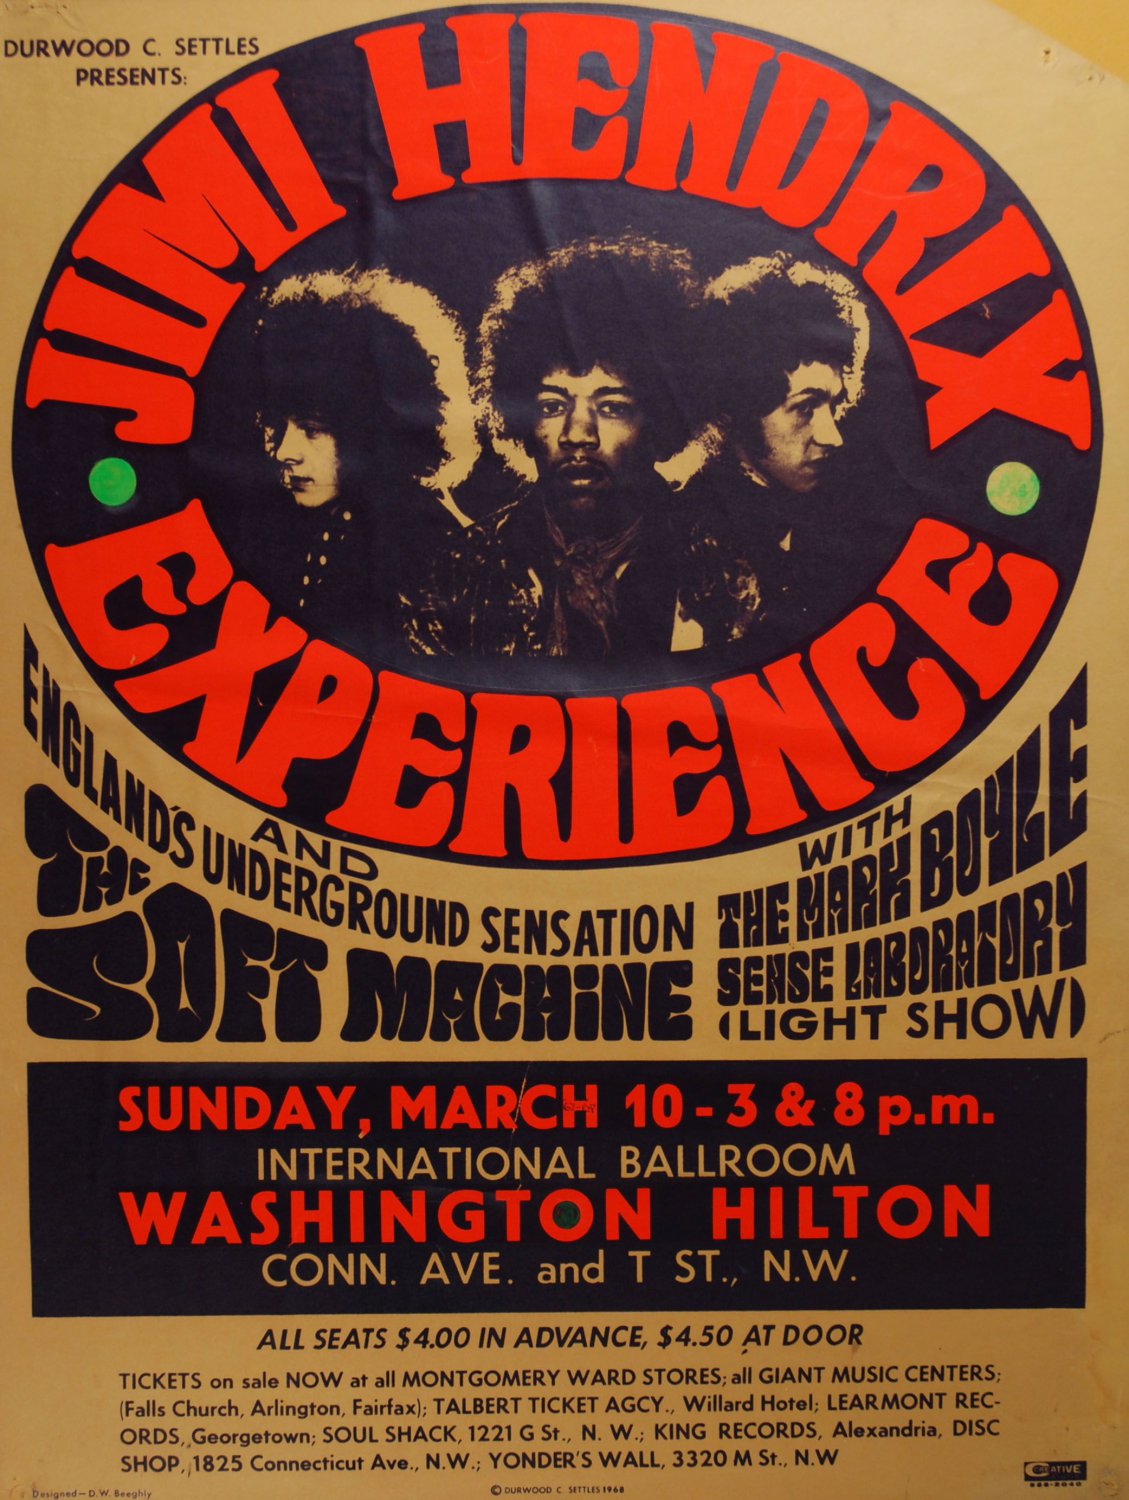 Jimi Hendrix Experience Concert Tour 18"x28" (45cm/70cm) Poster